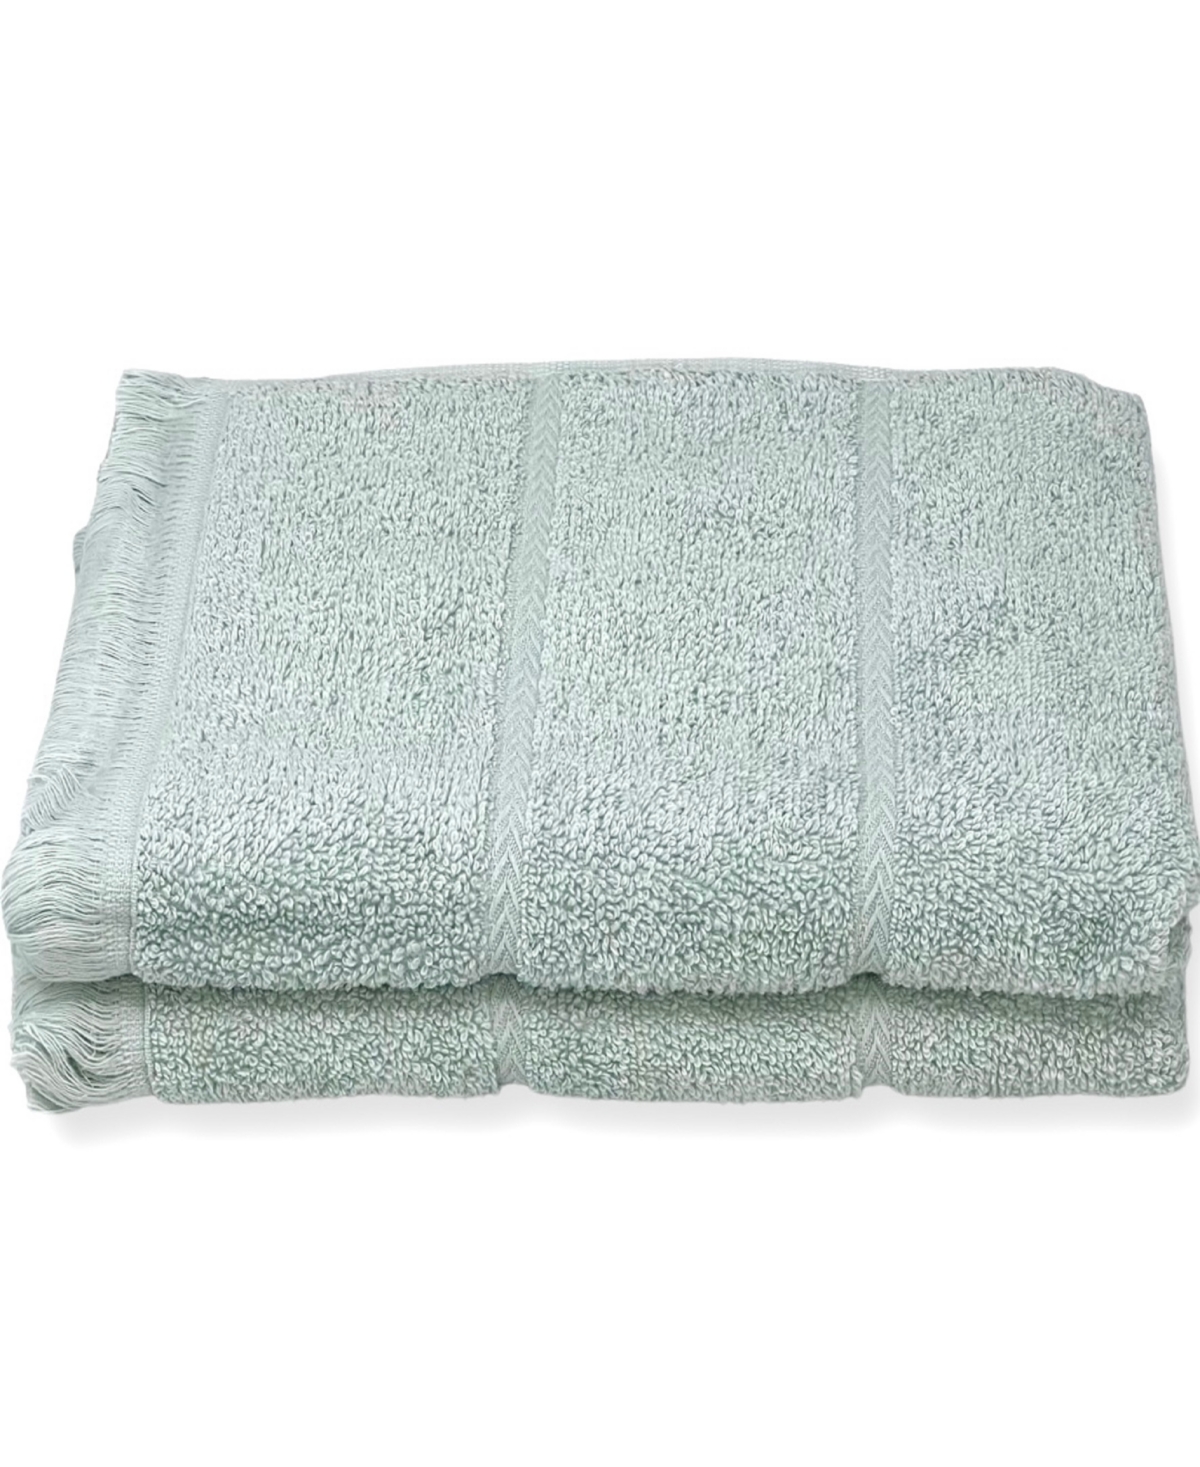 Ozan Premium Home Mirage Collection 2 Piece Turkish Cotton Luxury Hand Towel Set Bedding In Green